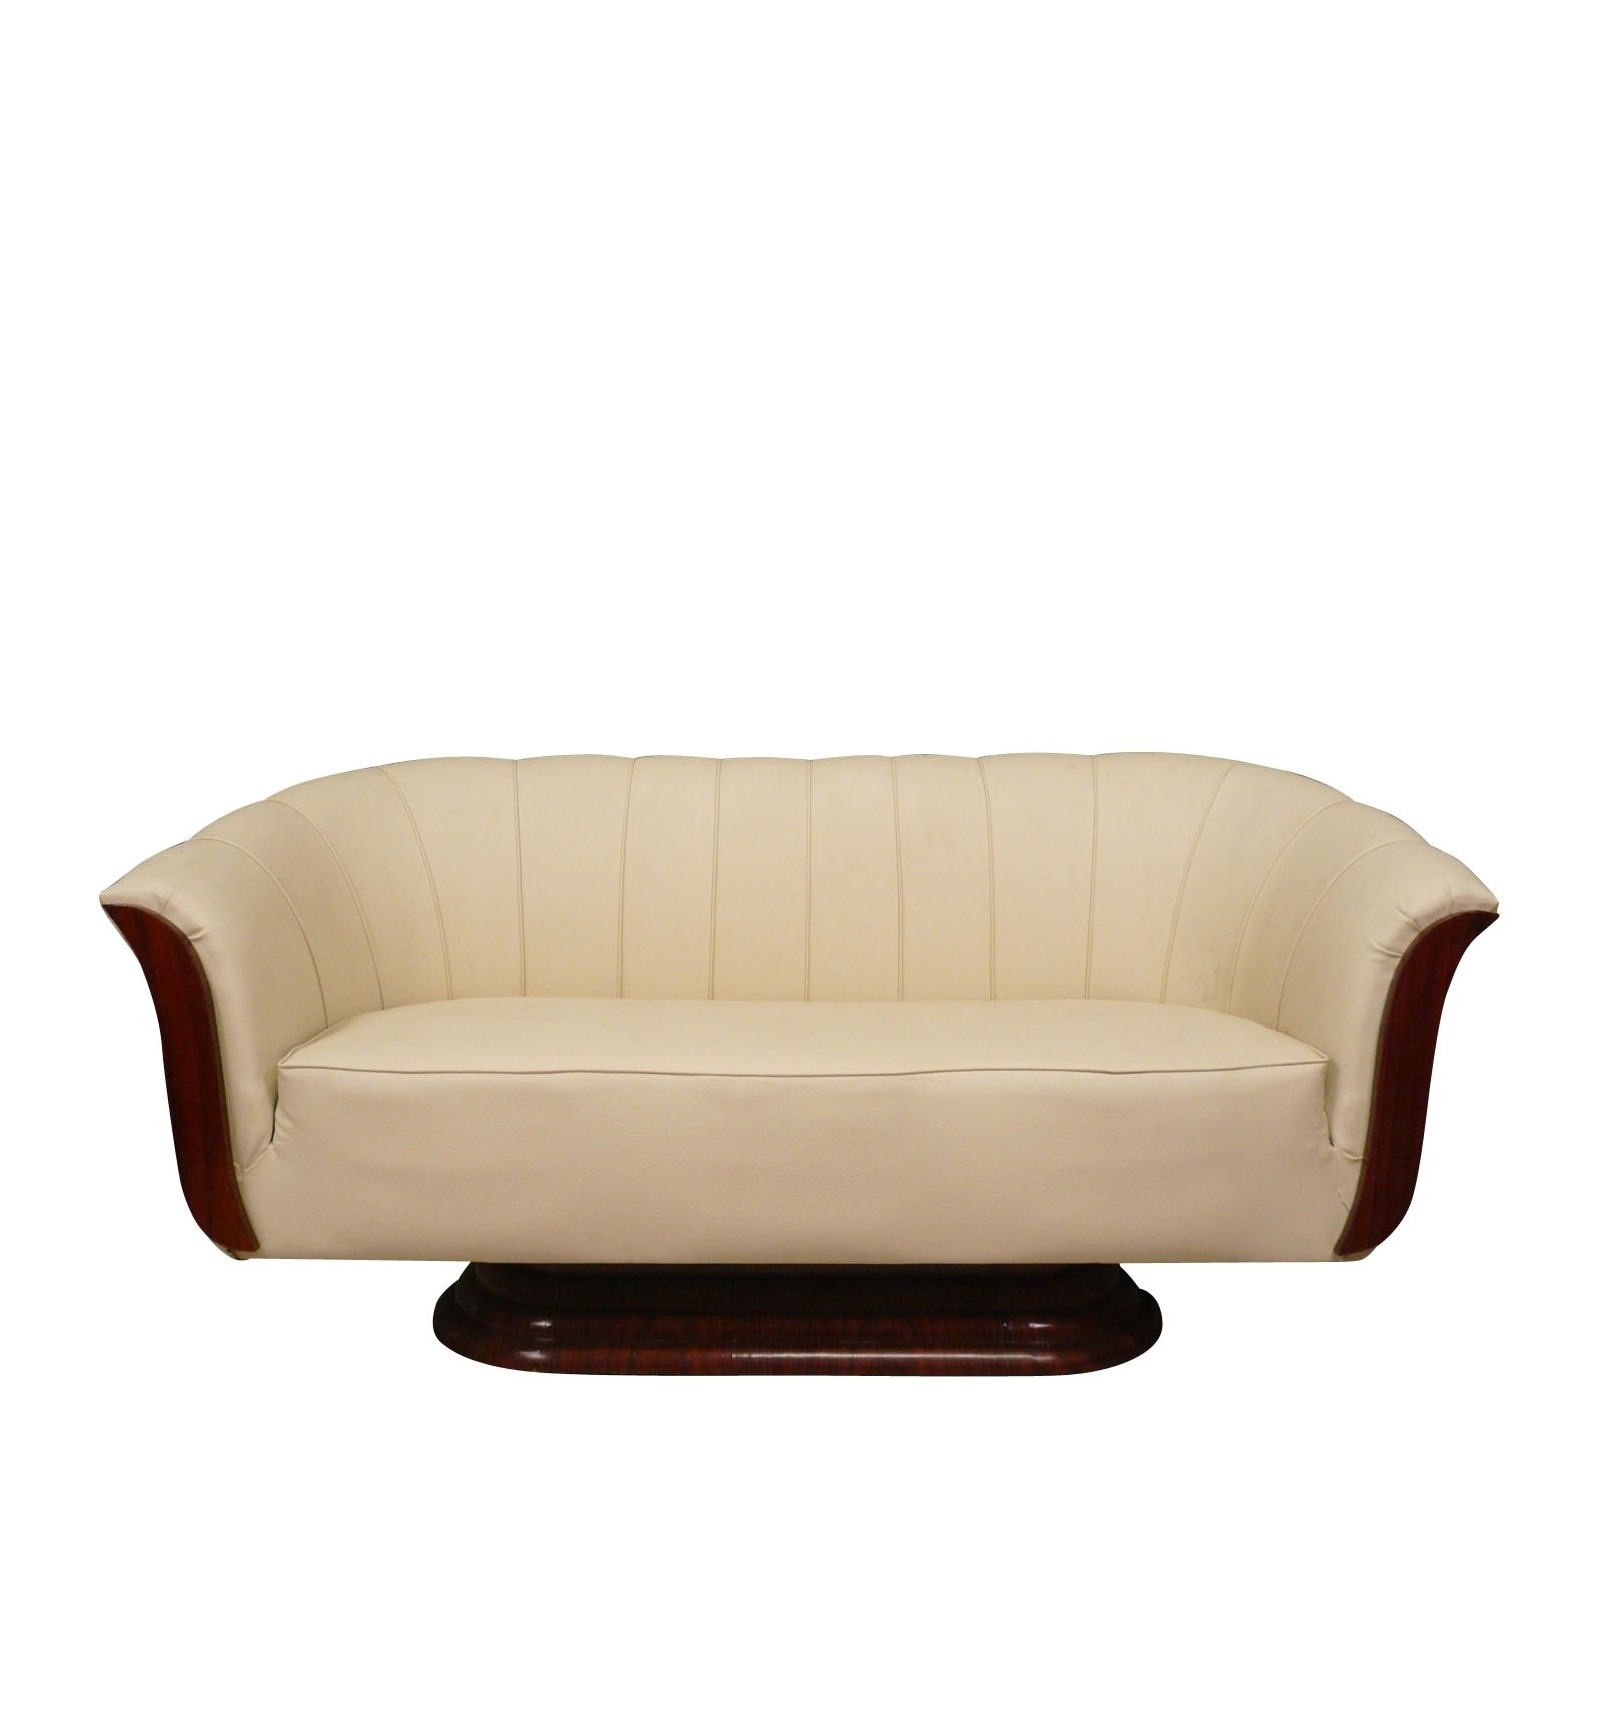 Art Deco sofa - Armchairs and lounge furniture